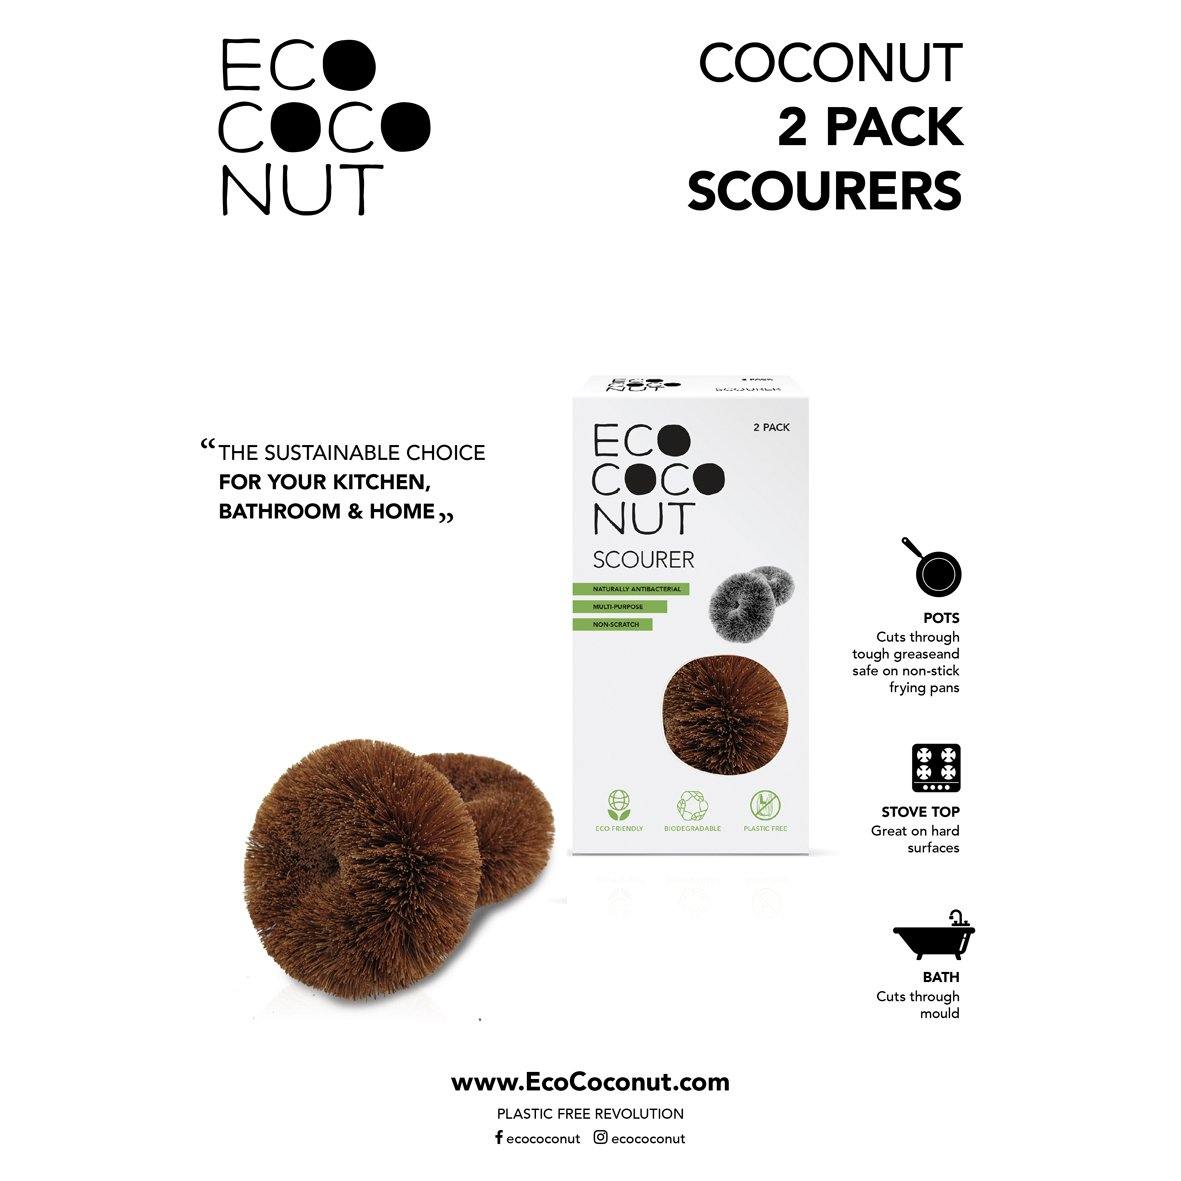 Ecococonut Cococonut Sponges Infographic